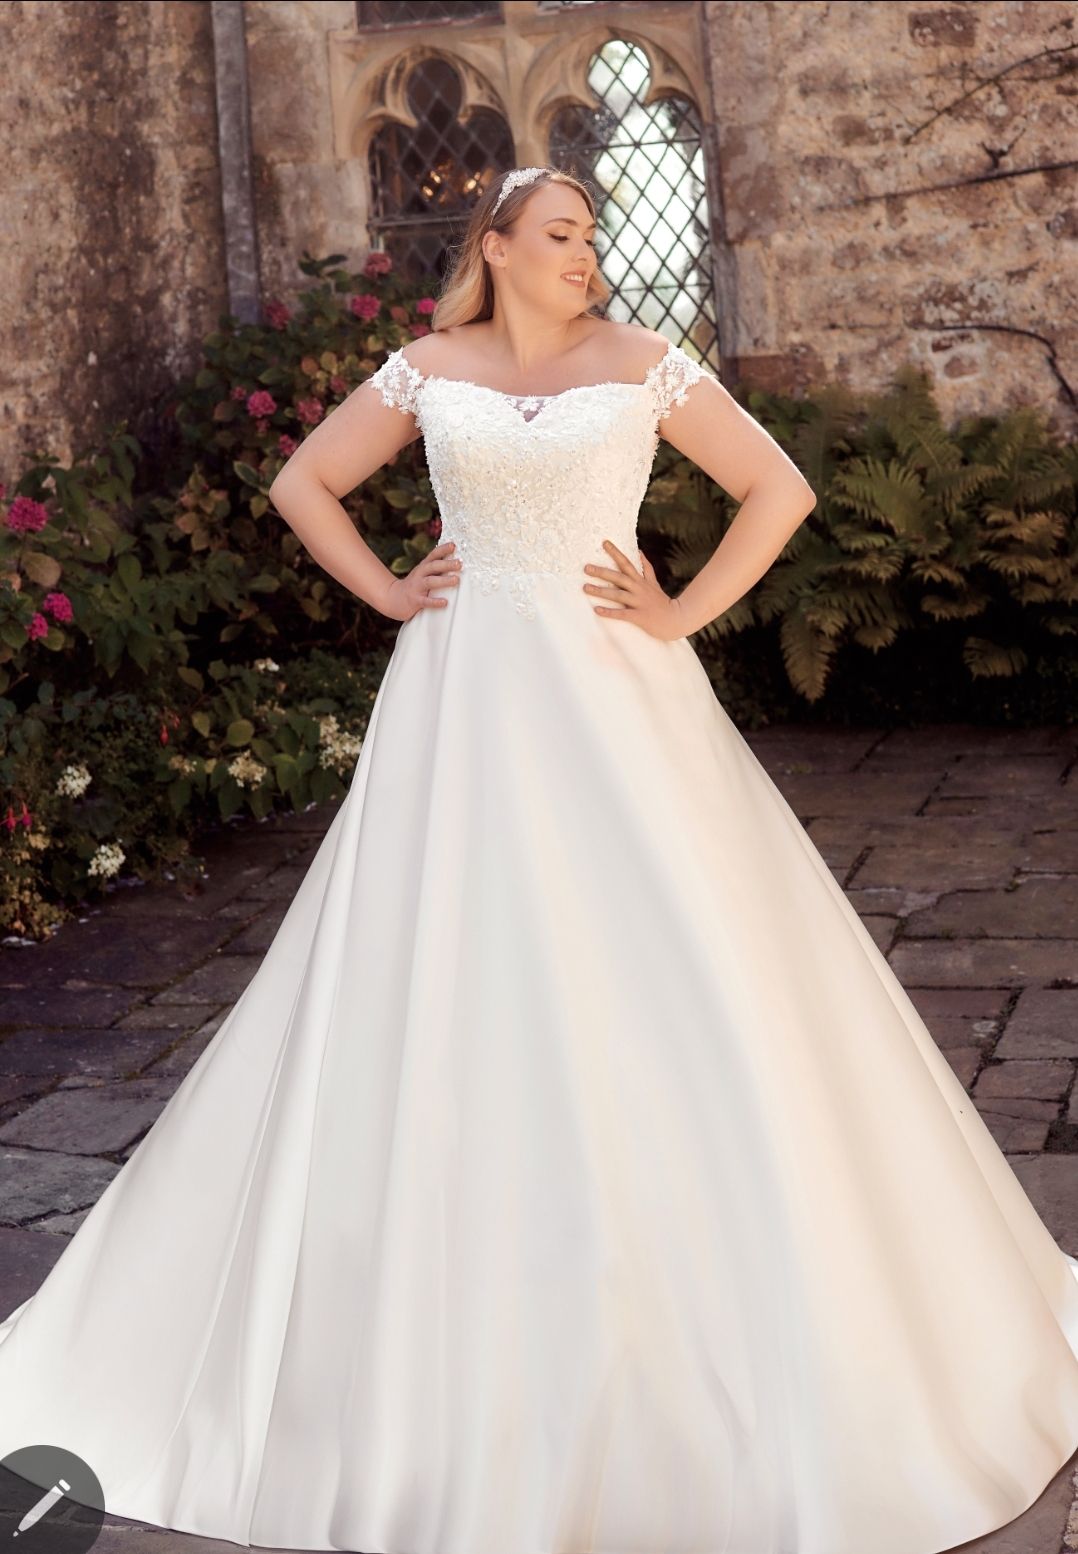 Best Dress 2 Impress Bridal-Image-31